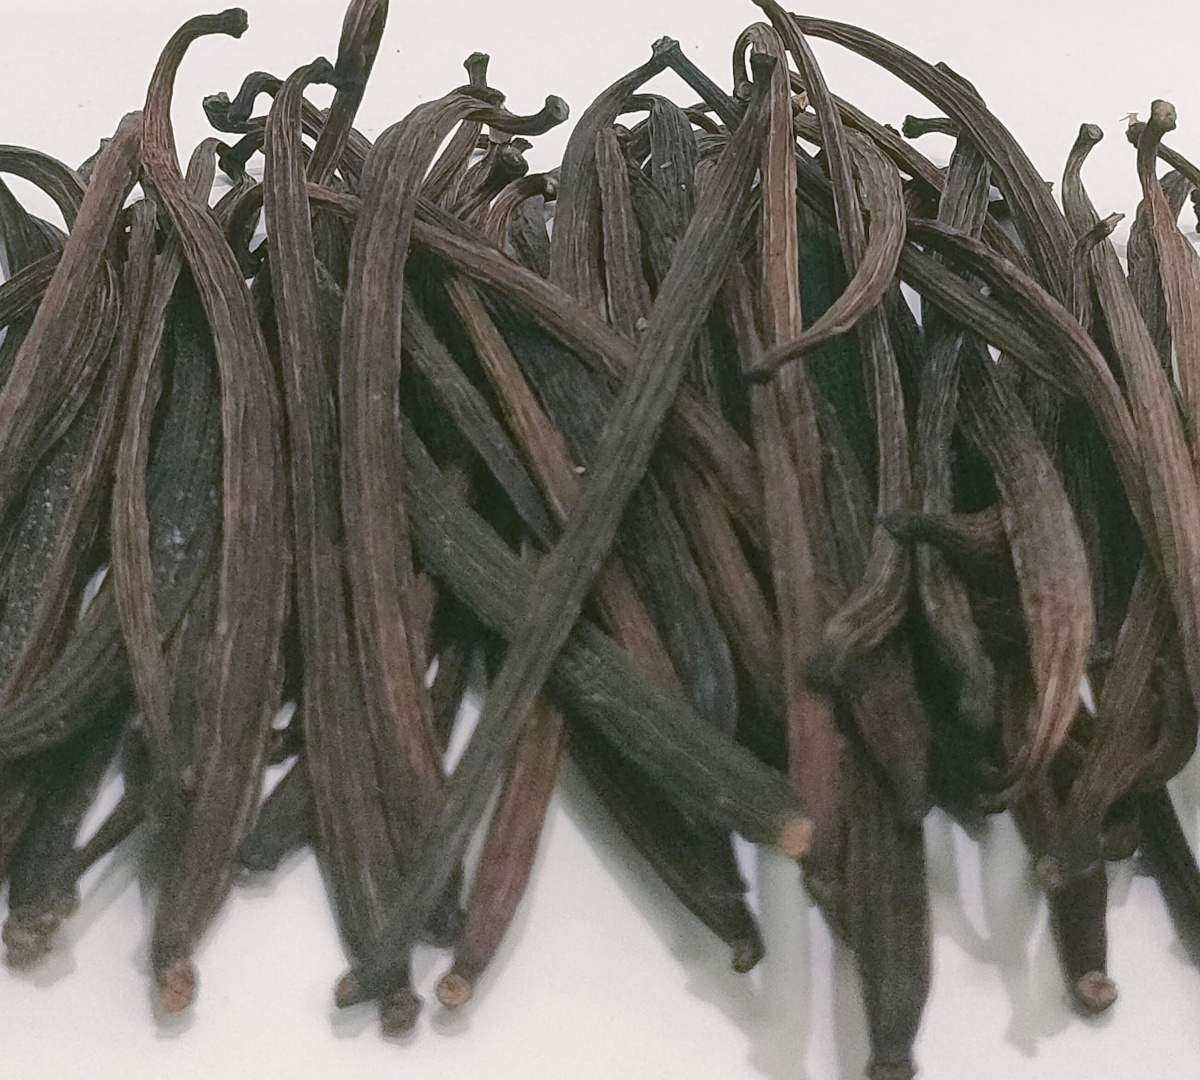 Vanilla Beans Buah 10GR Grade A Gourmet – Kualitas Terbaik dan Termurah Tanaman Vanili